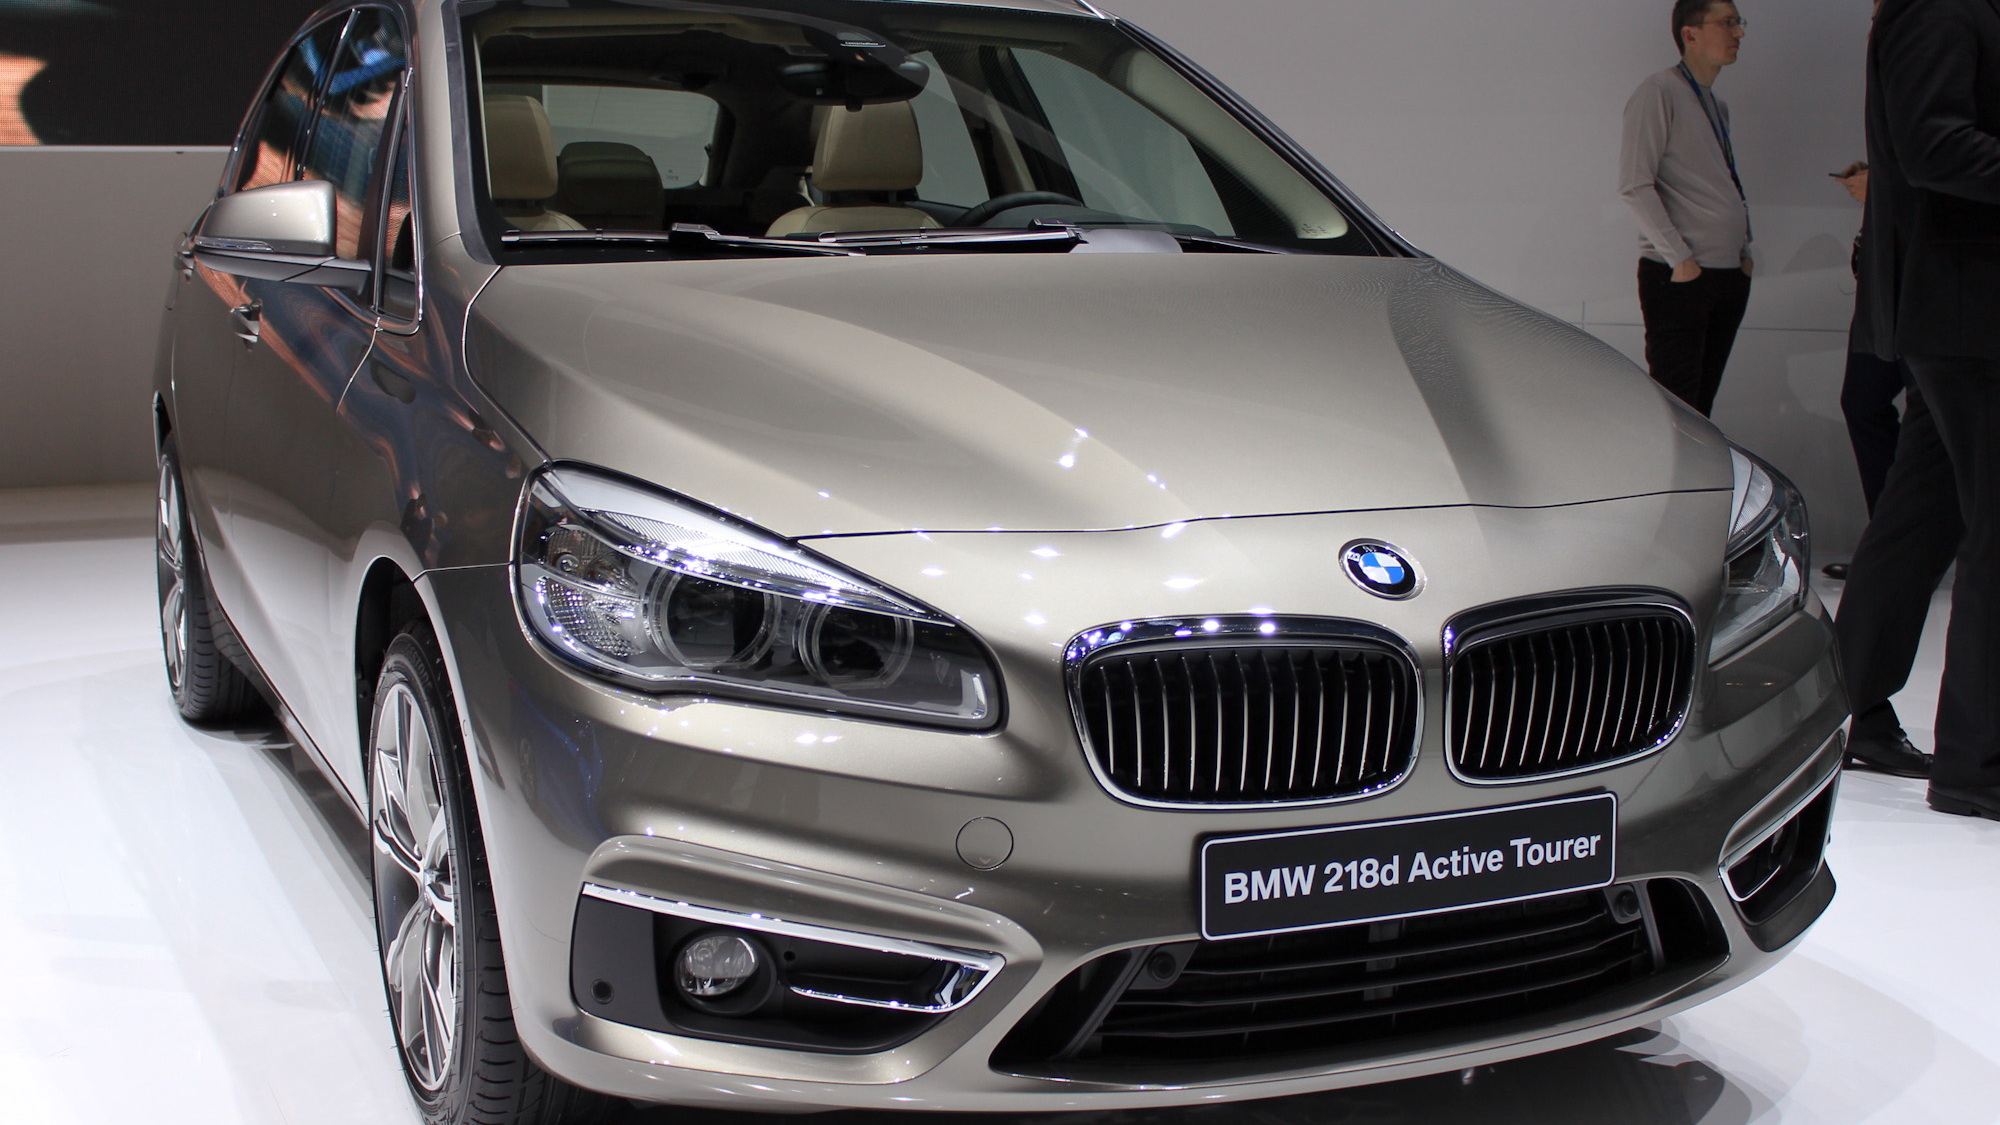 BMW 2-Series Active Tourer, 2014 Geneva Motor Show